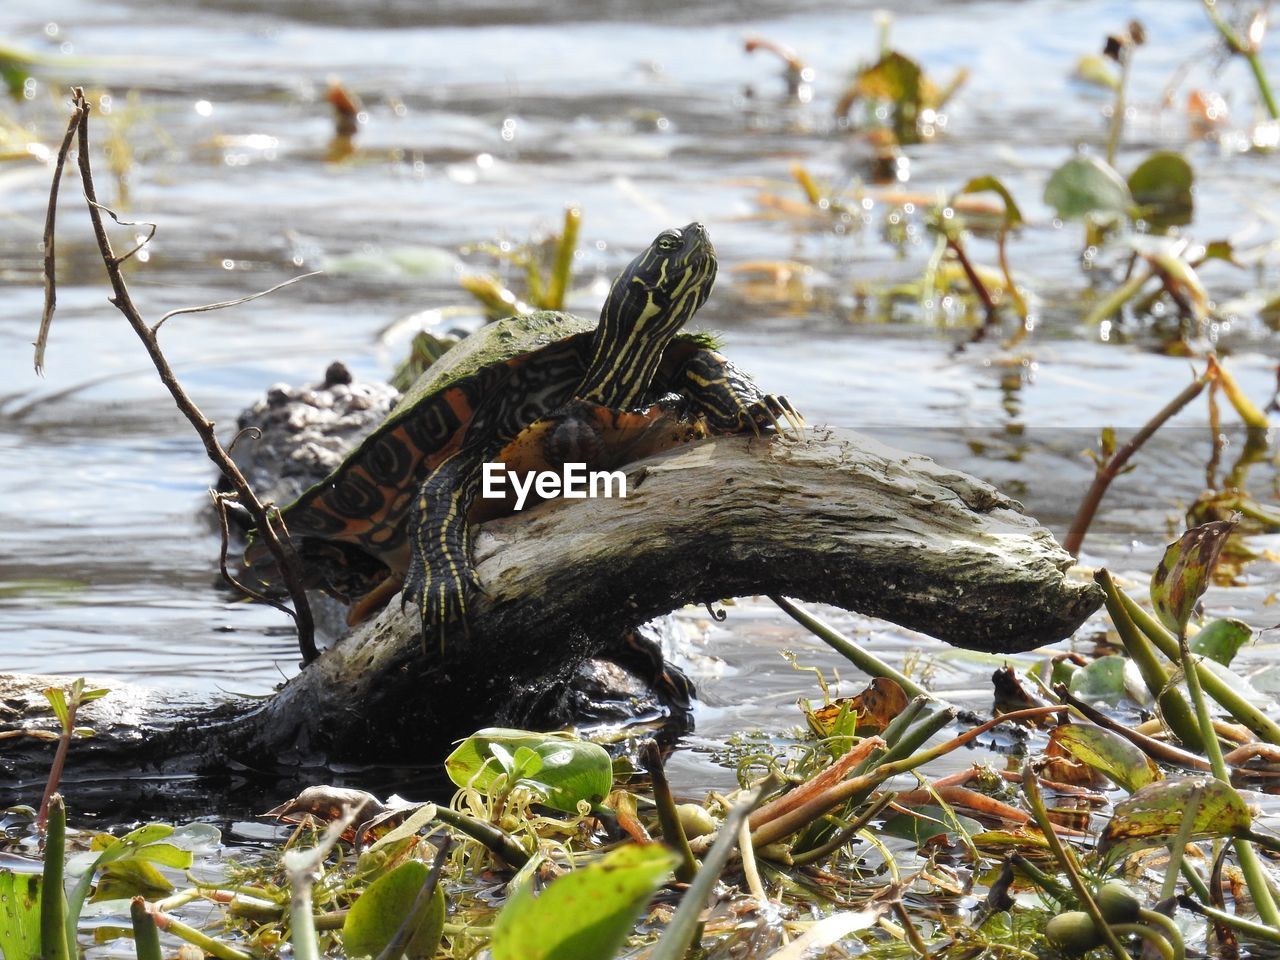 Turtle on wood in lake